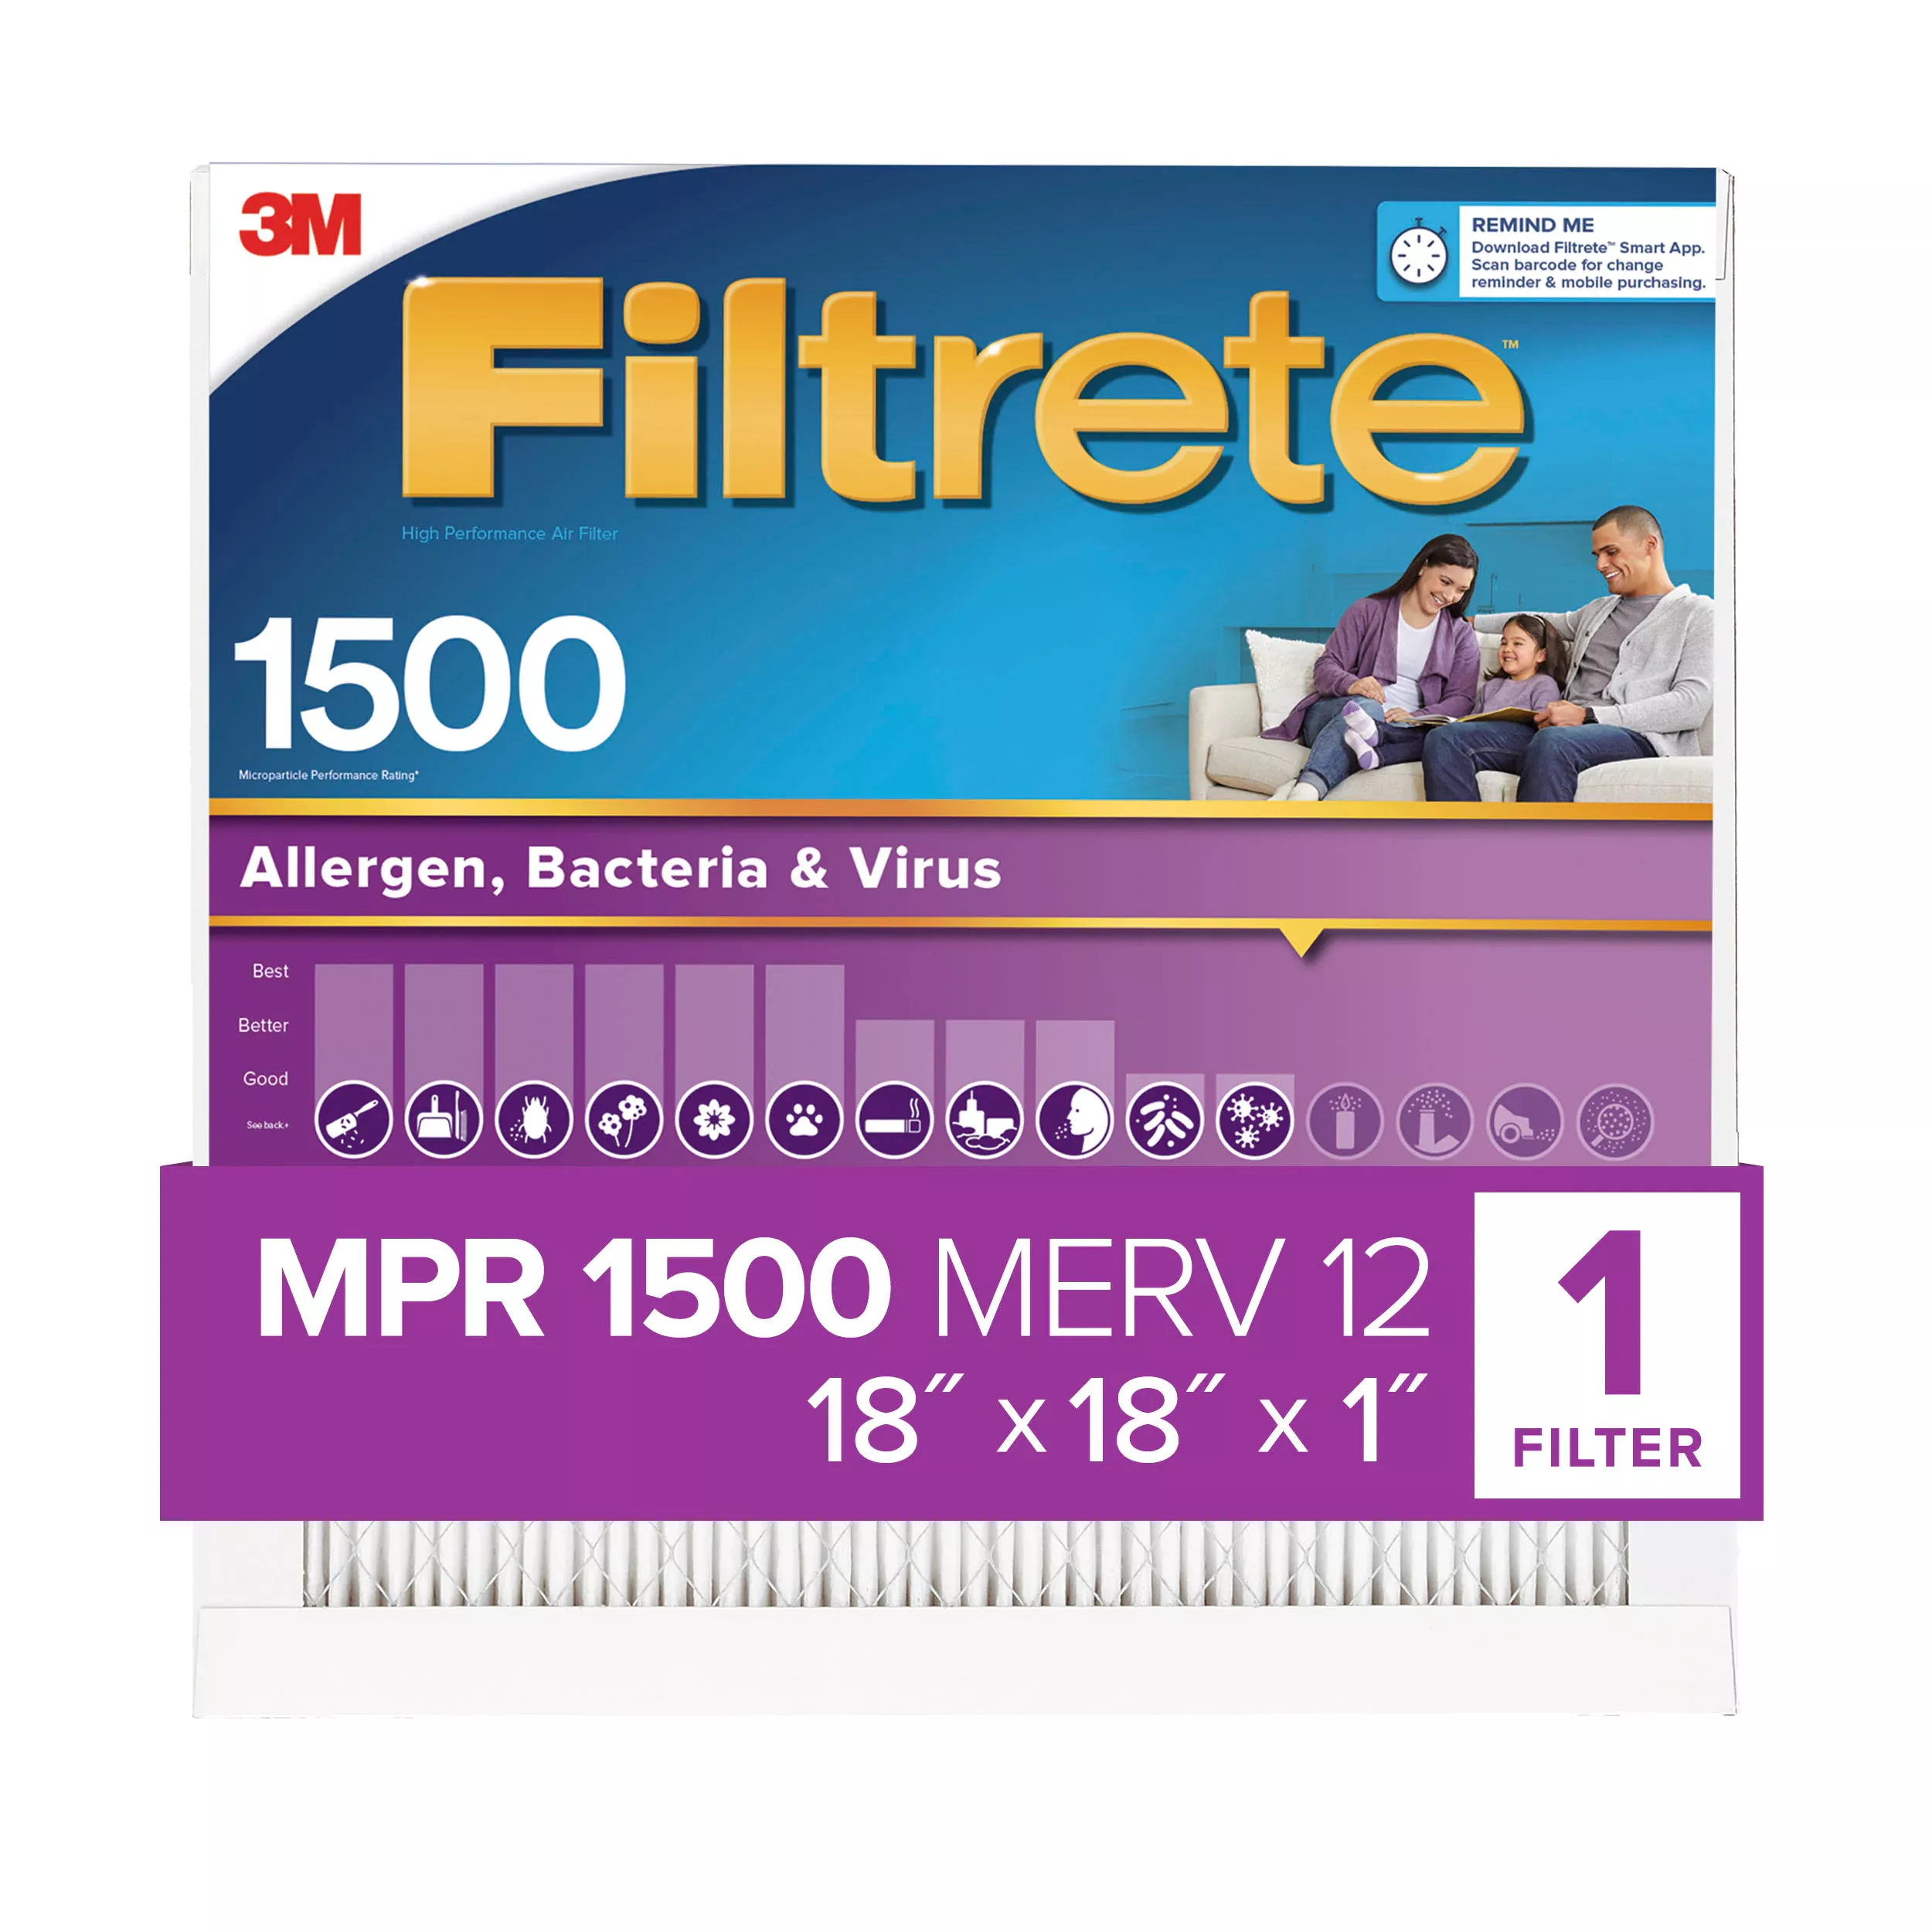 Filtrete™ Allergen, Bacteria & Virus Air Filter, 1500 MPR, 2017-4, 18 in
x 18 in x 1 in (45,7 cm x 45,7 cm x 2,5 cm)